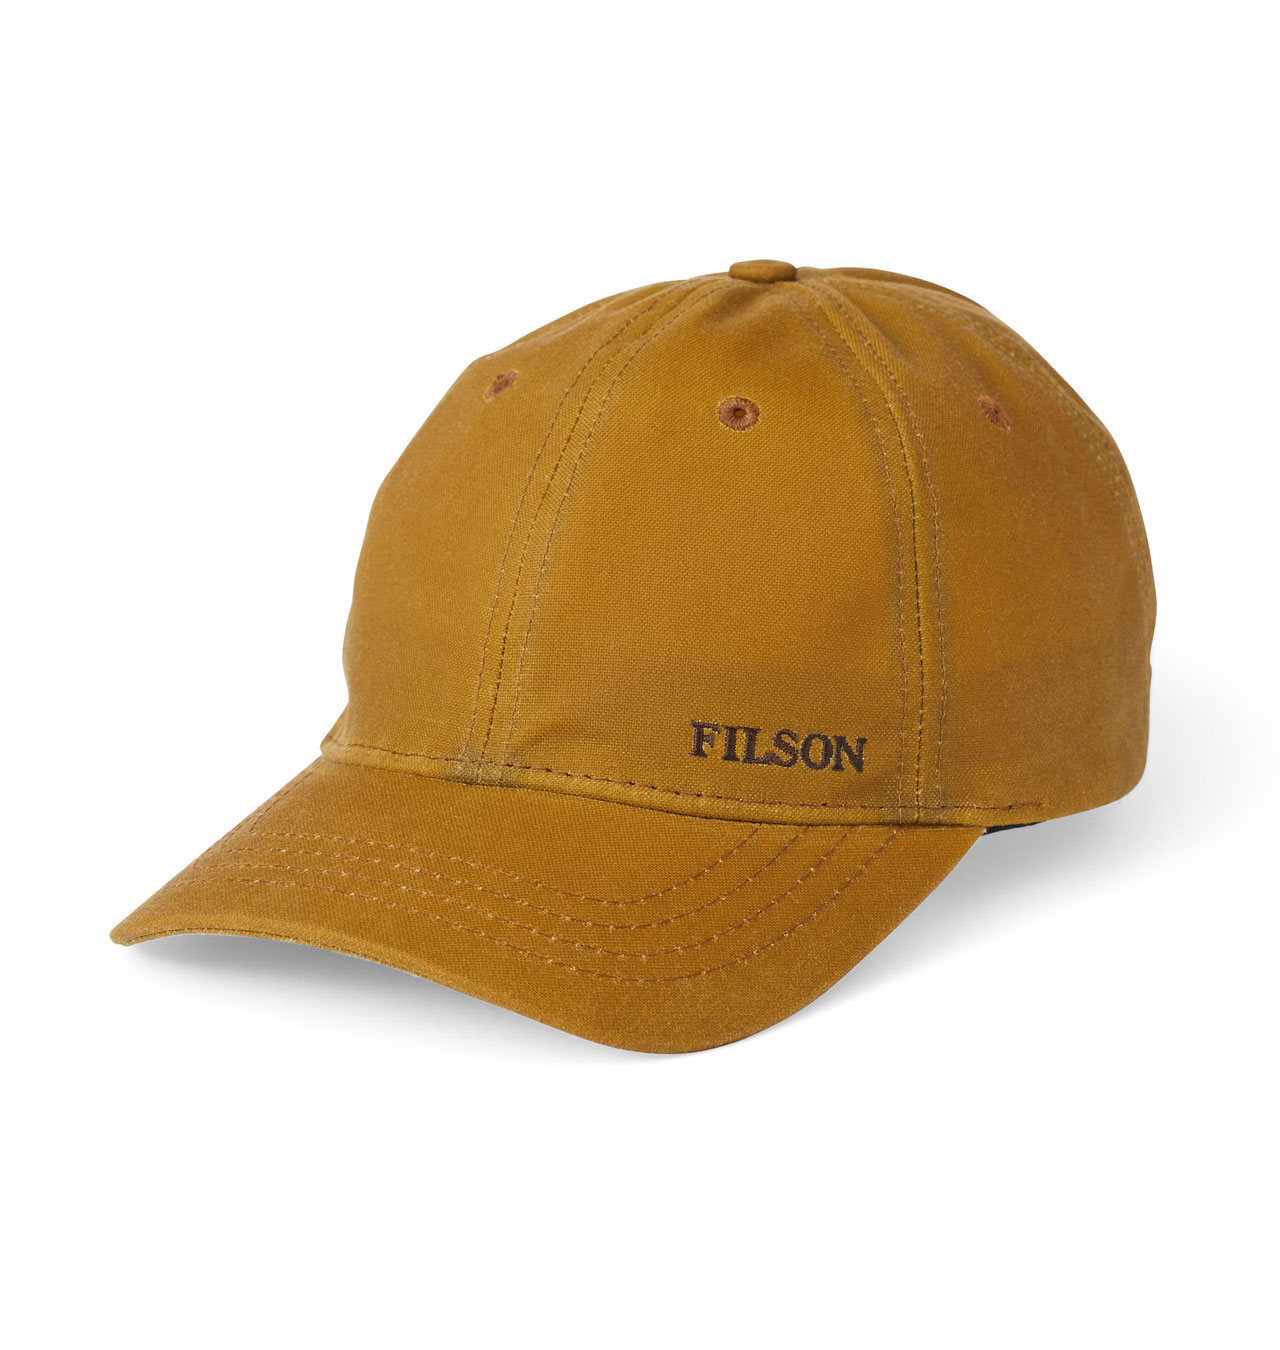 Filson - Oil Tin Low-Profile Cap - Dark Tan